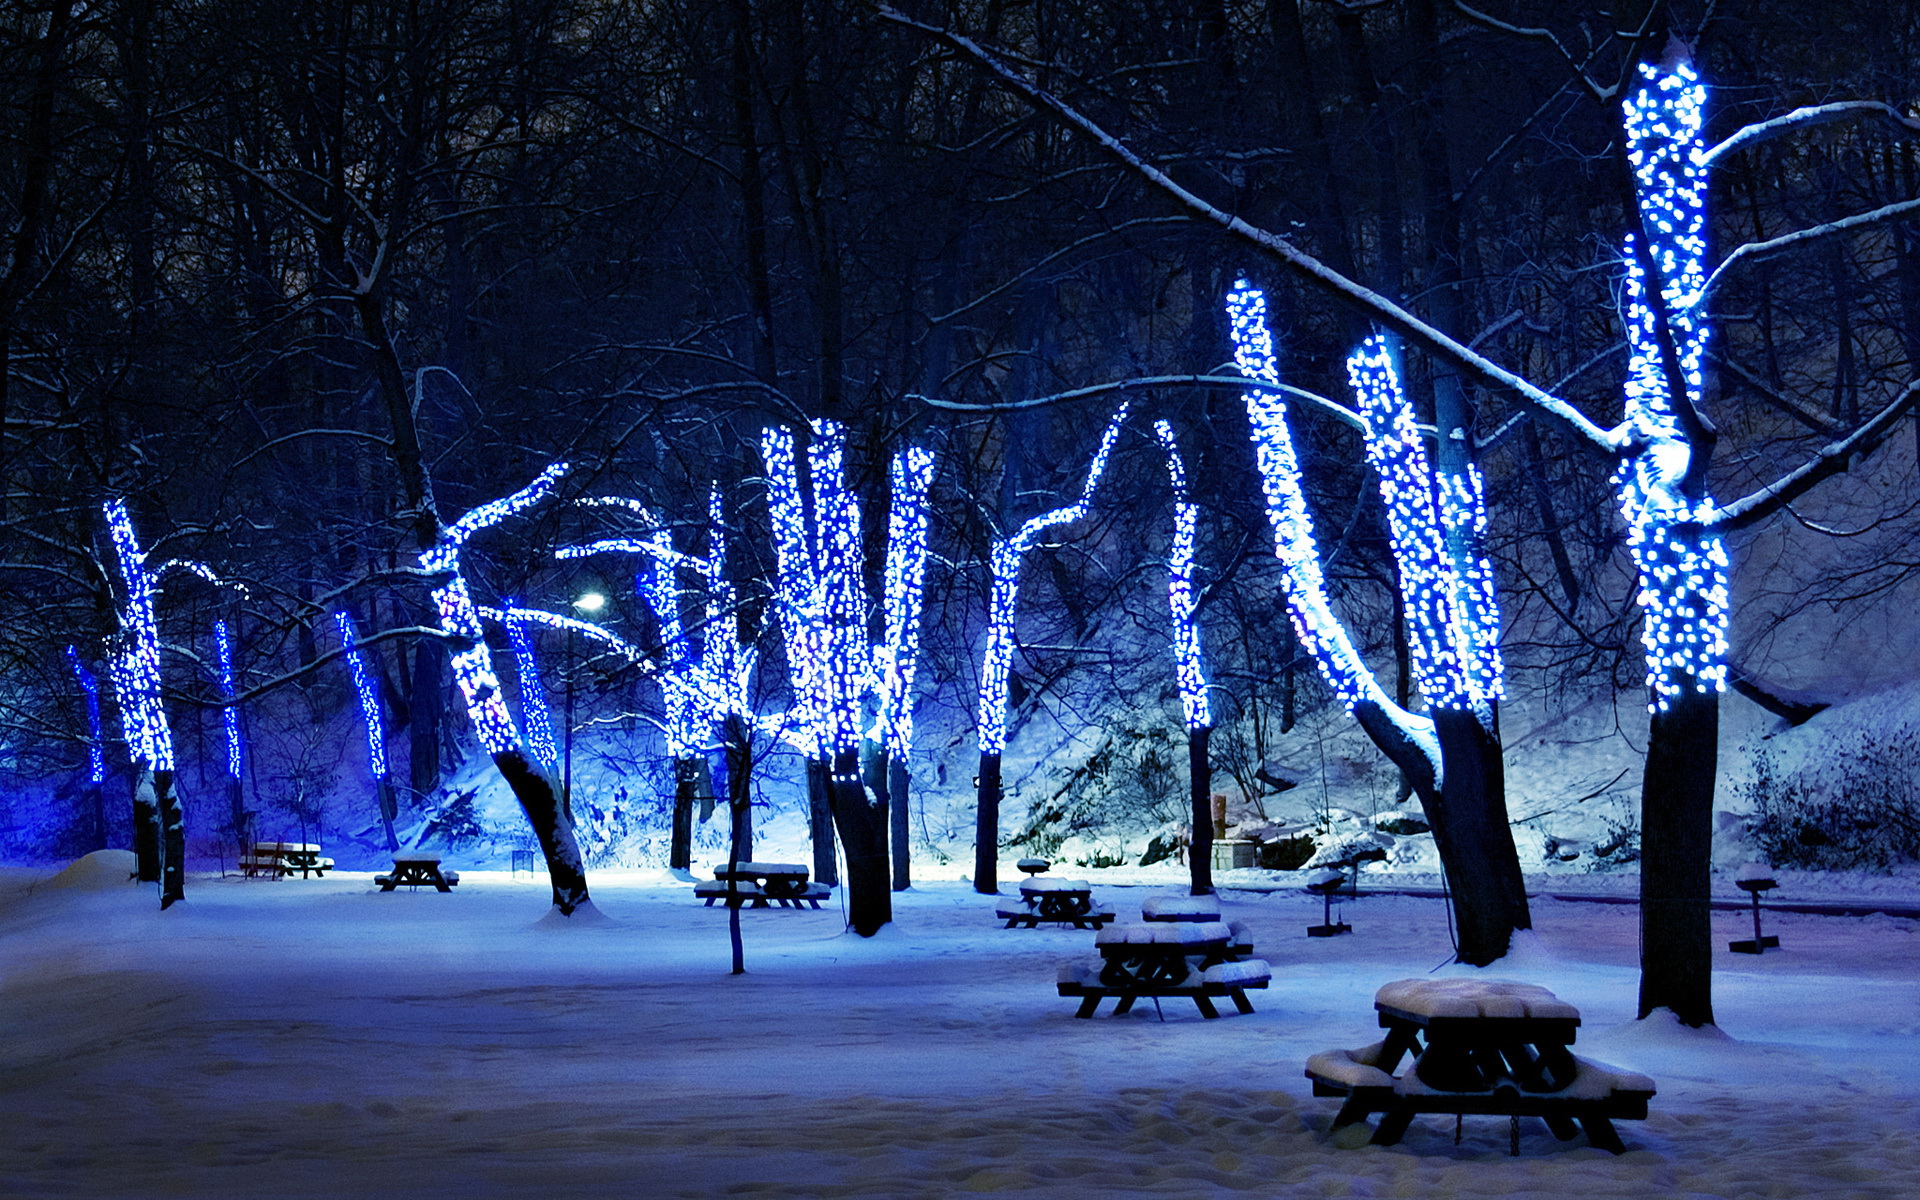 Lights trees park bench picnic tables winter snow night